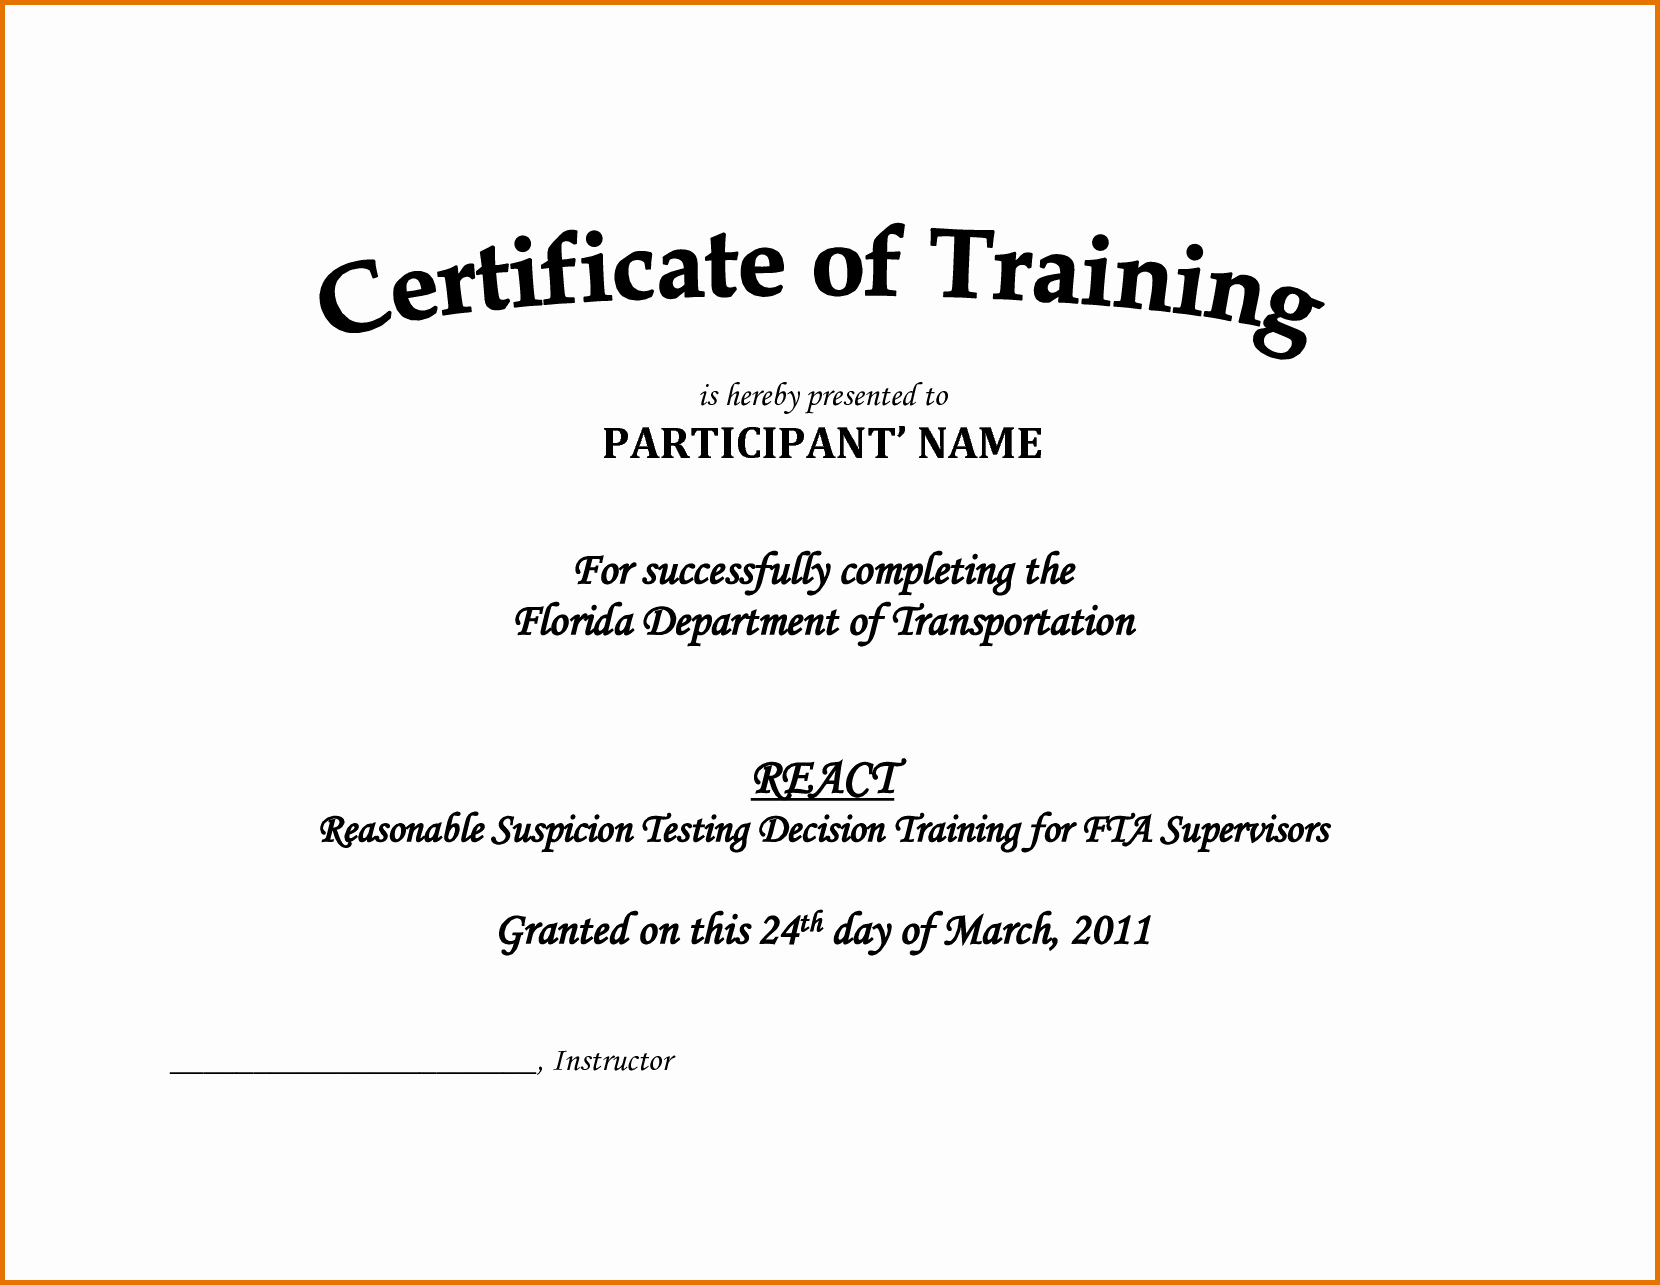 Certificate Of Training Template Word Luxury Certificate Of Training Templatereference Letters Words